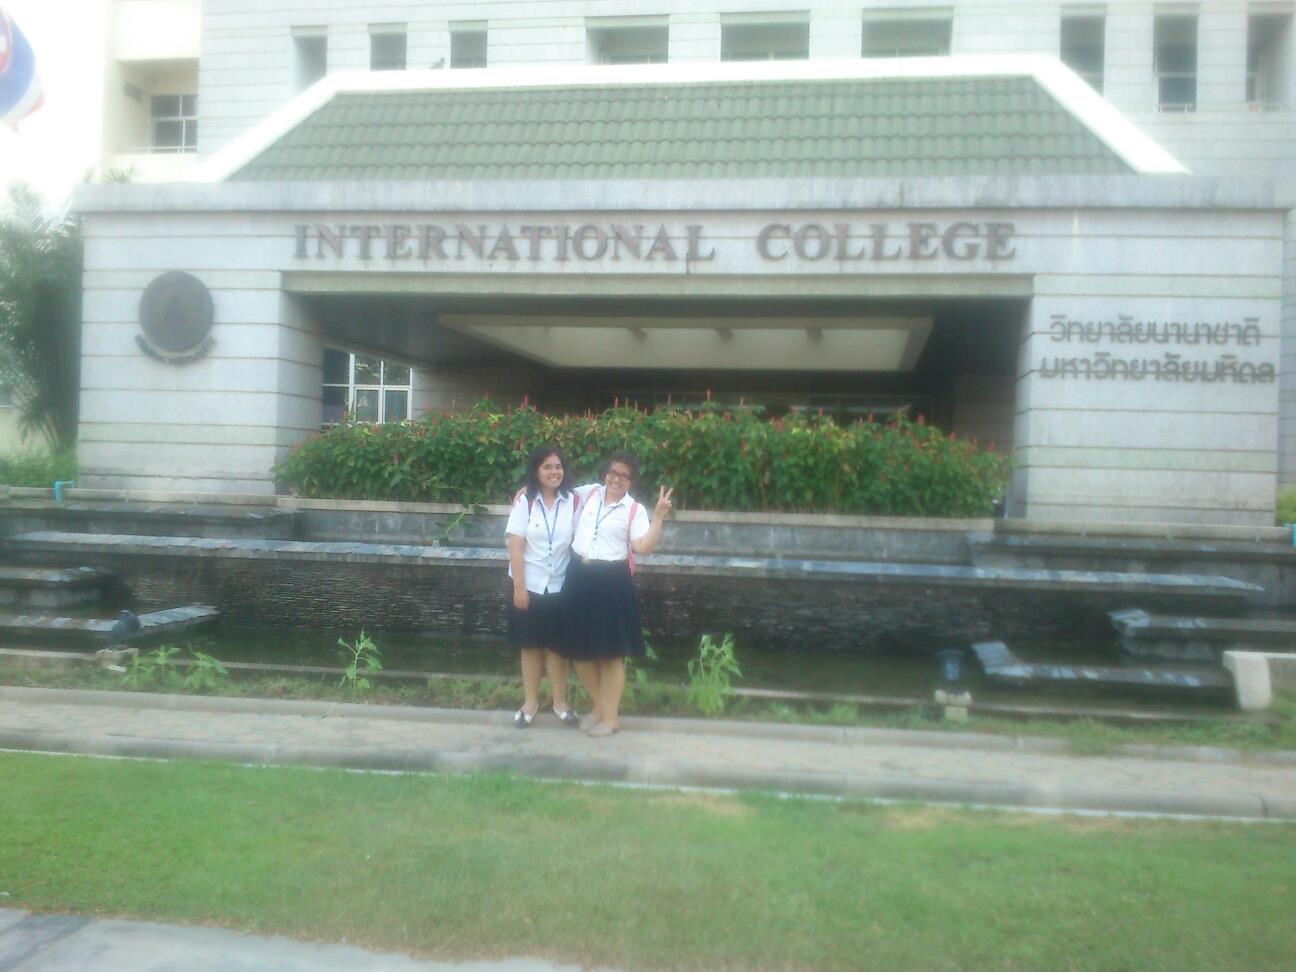 Mahidol University International College